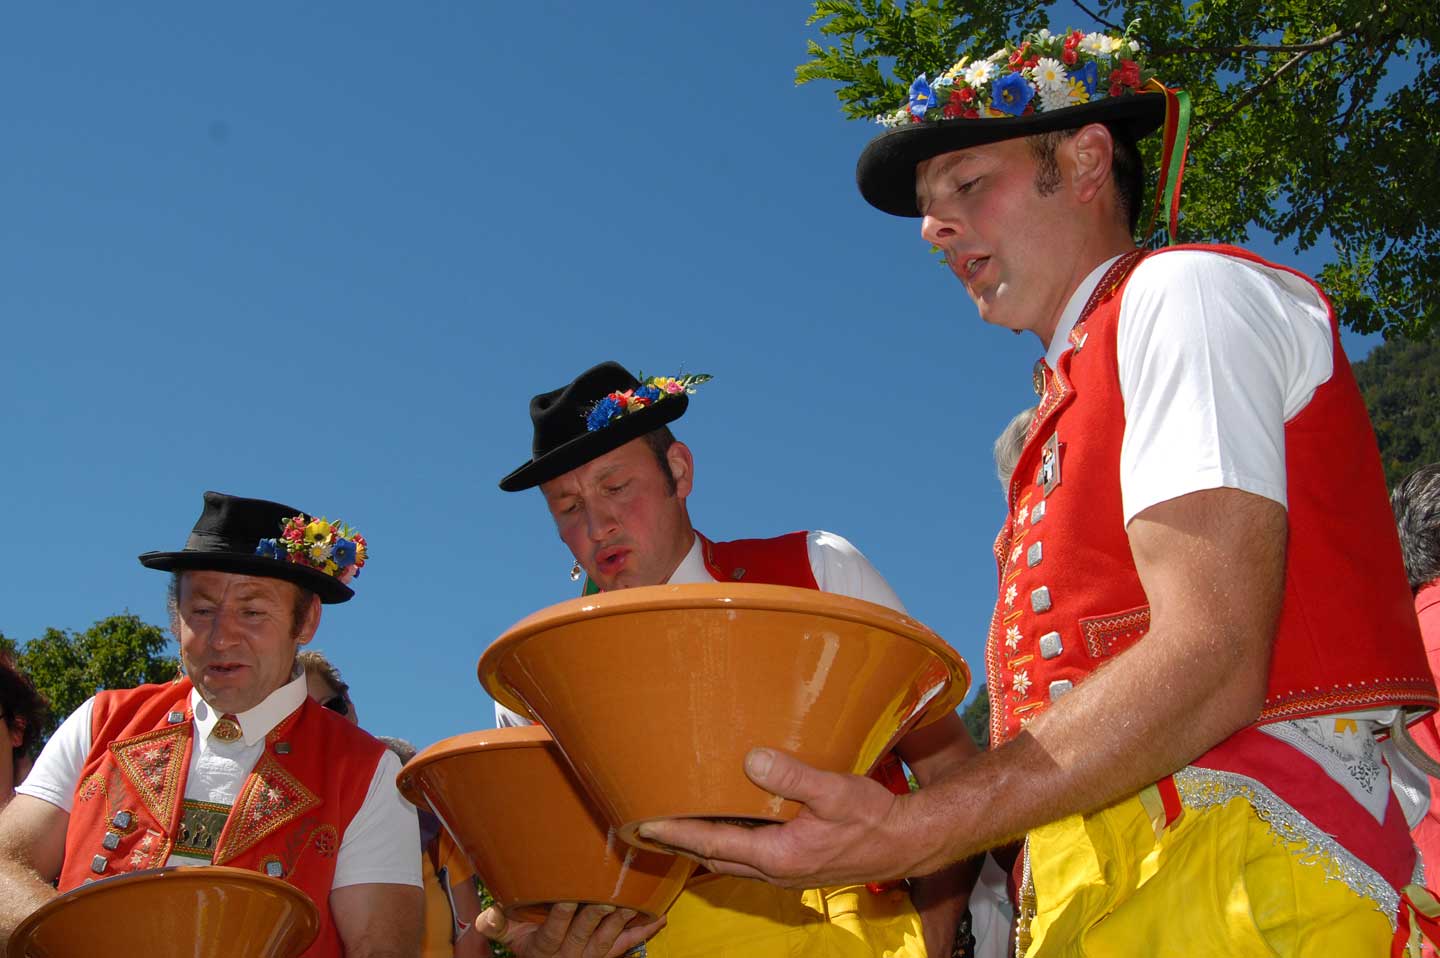 Les « Talerschwinger » d’Appenzell à la fête d’Unspunnen en 2006 © Steiner/Verein Schweizerisches Trachten- und Alphirtenfest Unspunnen